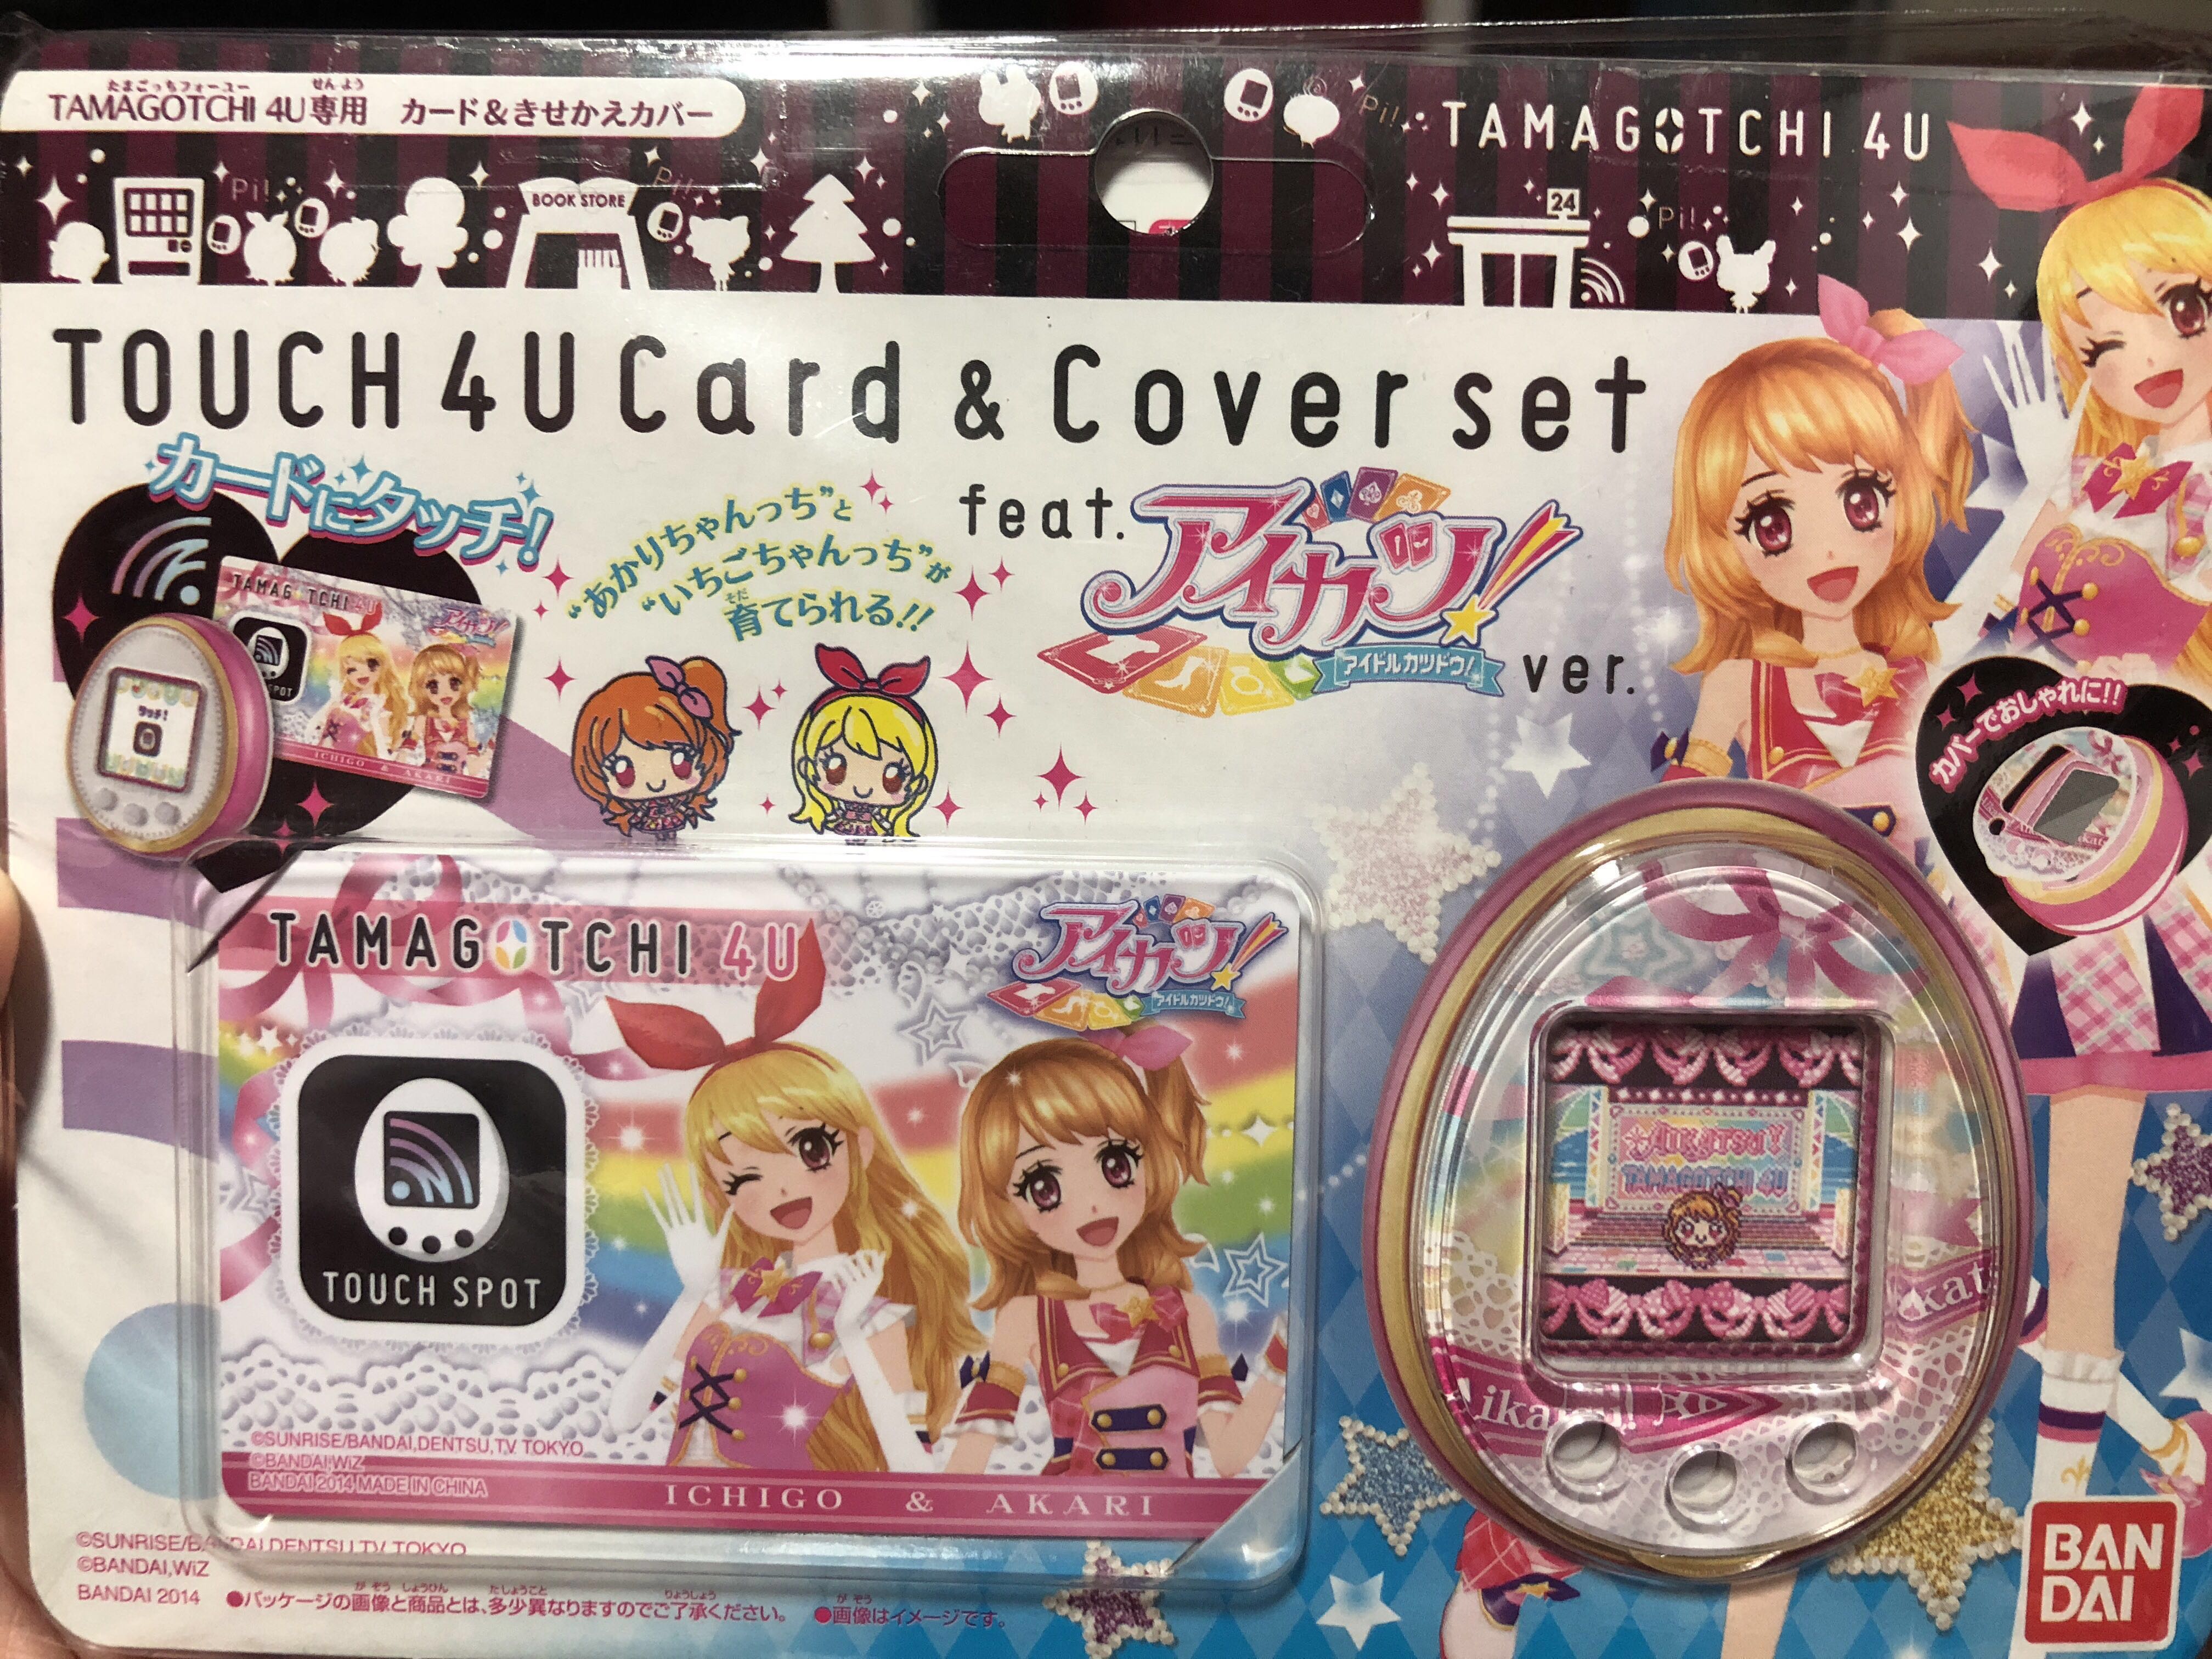 TAMAGOTCHI TOUCH 4U Card and Cover set feat Aikatsu ver. 